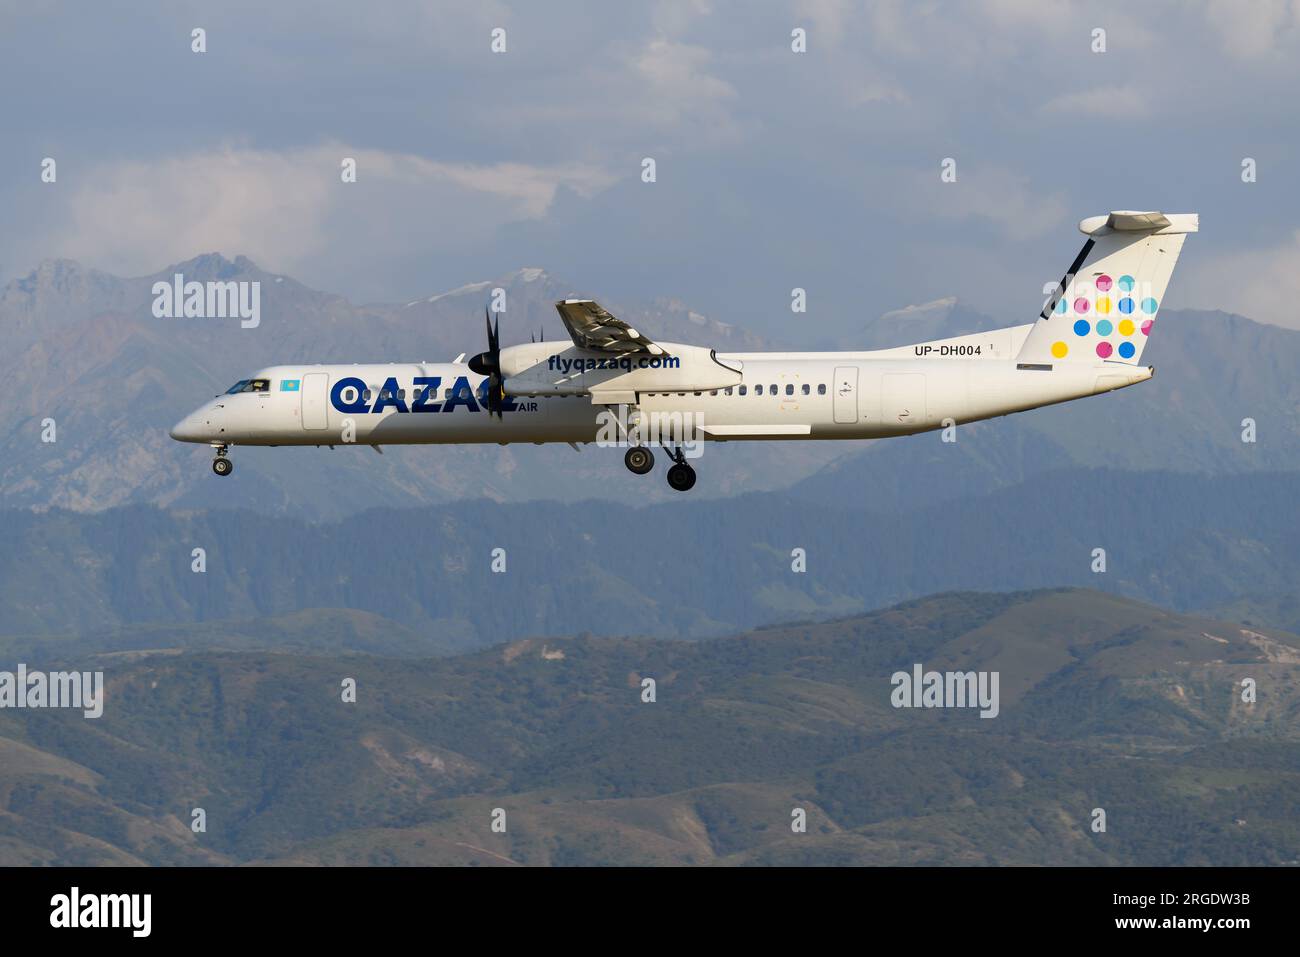 Qazar Air De Havilland Canada Dash 8-400 Flugzeug landet am Almaty Flughafen in Kasachstan. Fluggesellschaft QazarAir Bombardier Q400. Stockfoto